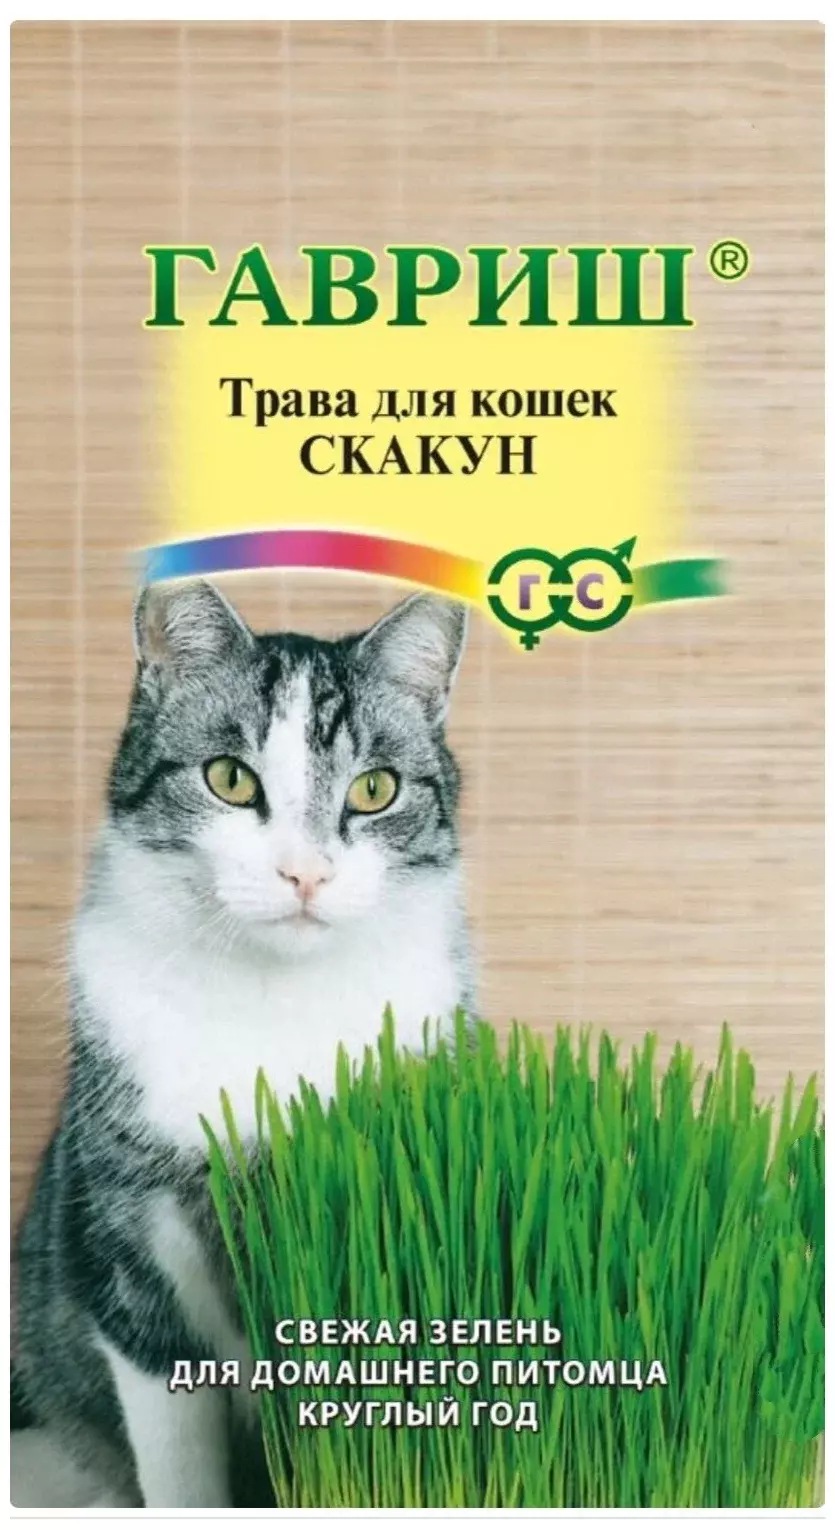 Семена Трава для кошек Скакун 10гр(Гавриш) цв